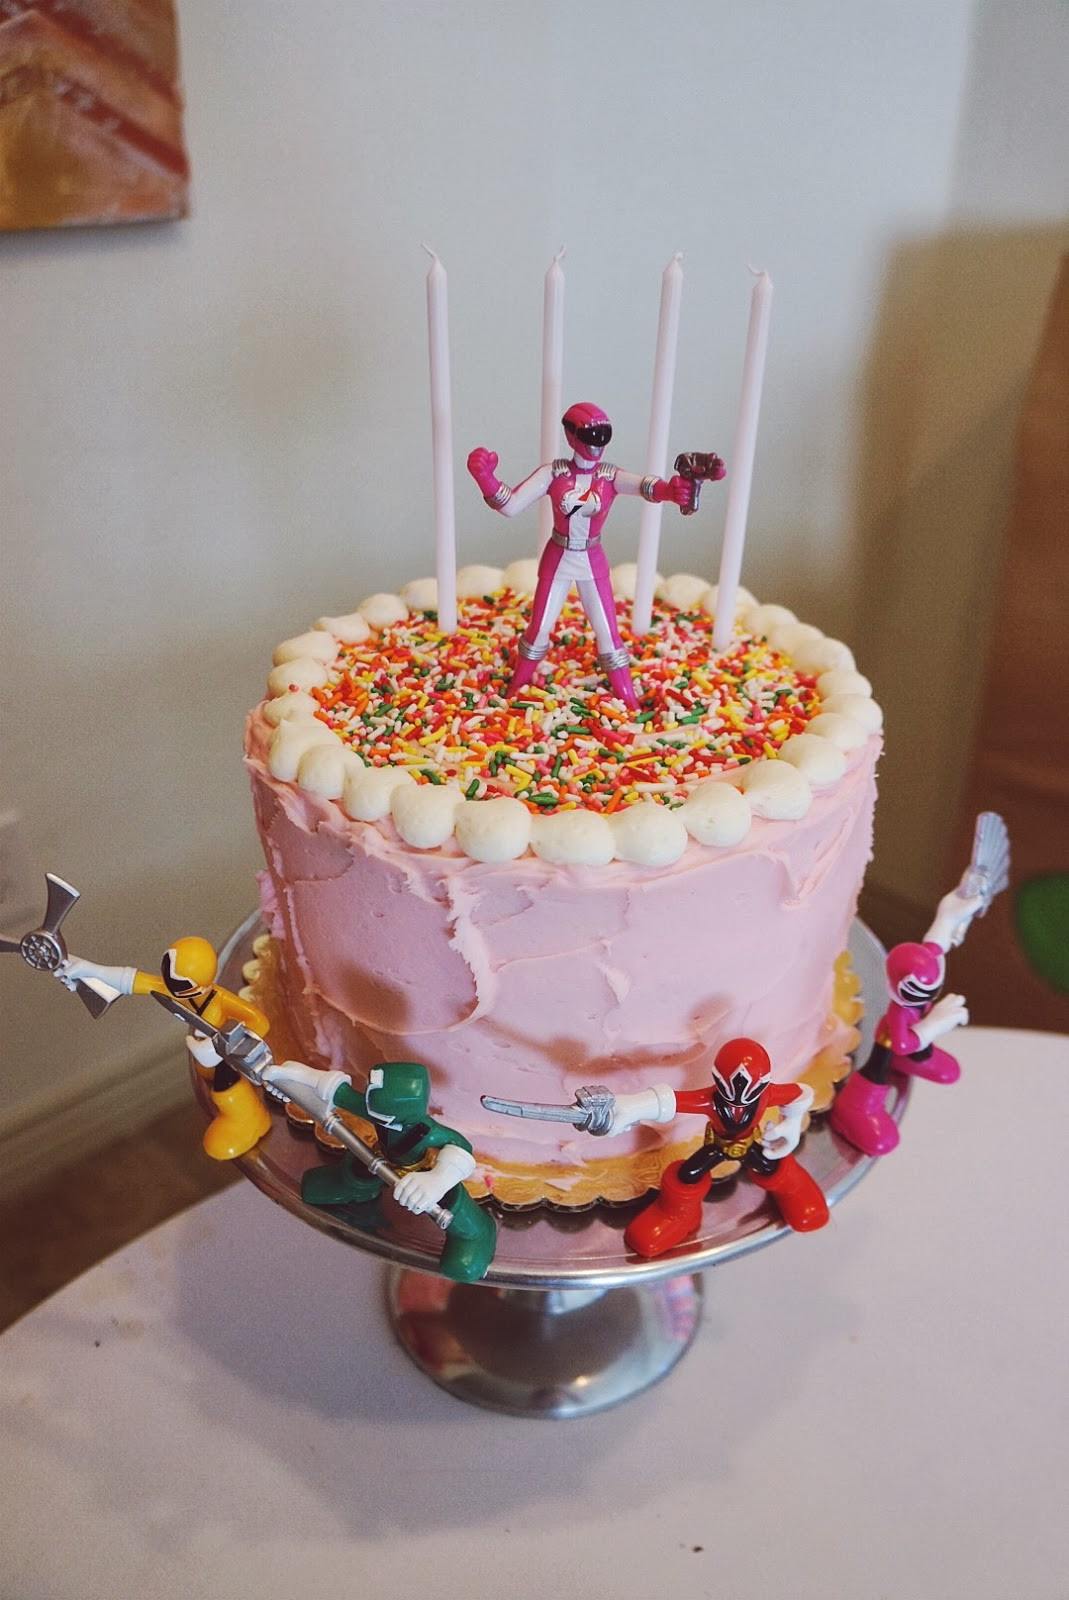 Power Ranger Birthday Cakes
 Copenhaven Ellie s 4th Birthday Party Power Rangers